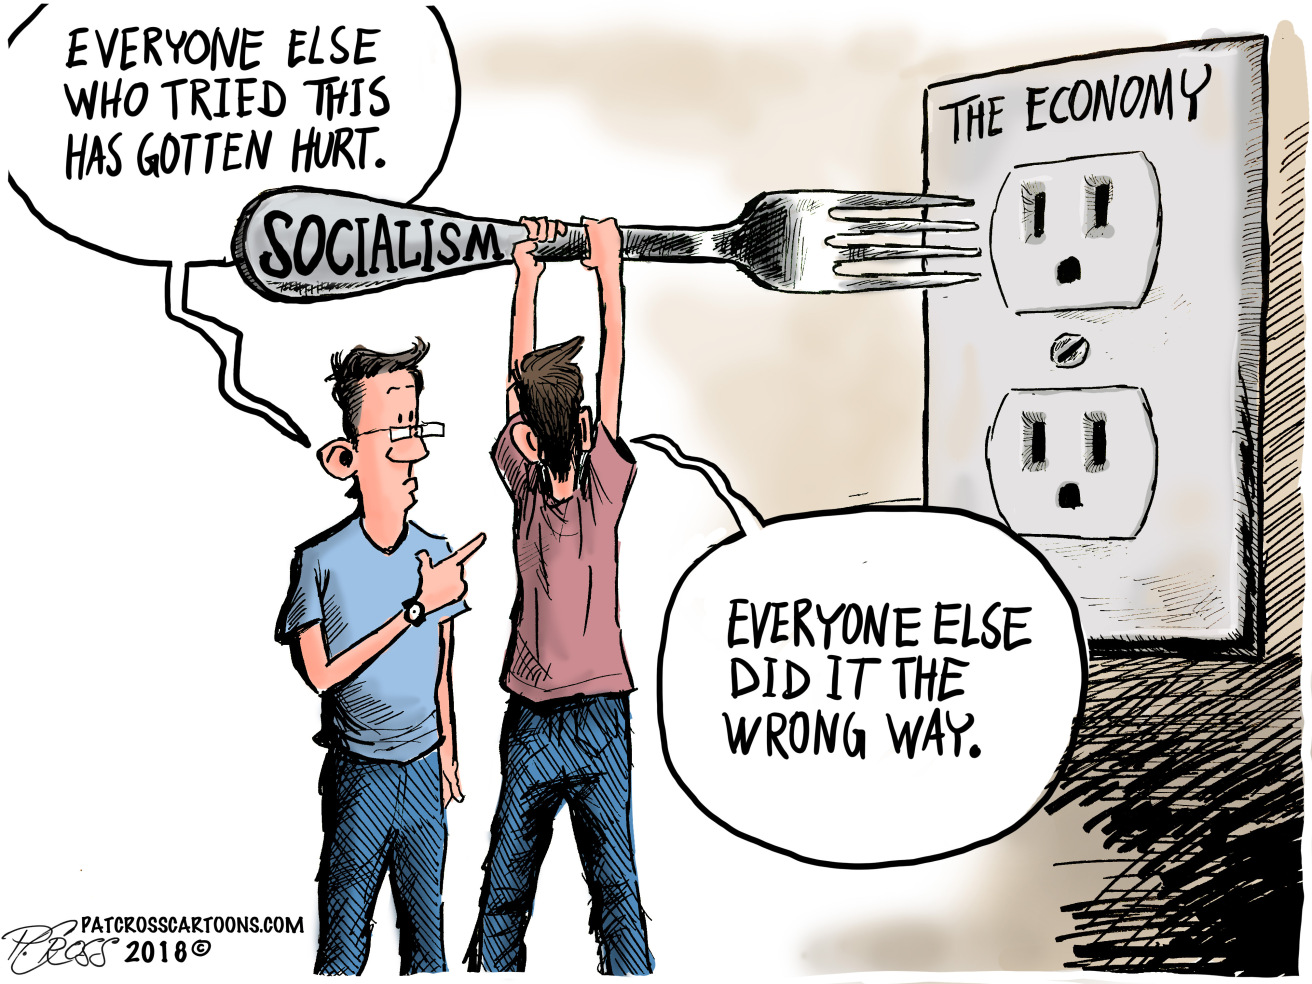 Socialism is Bad